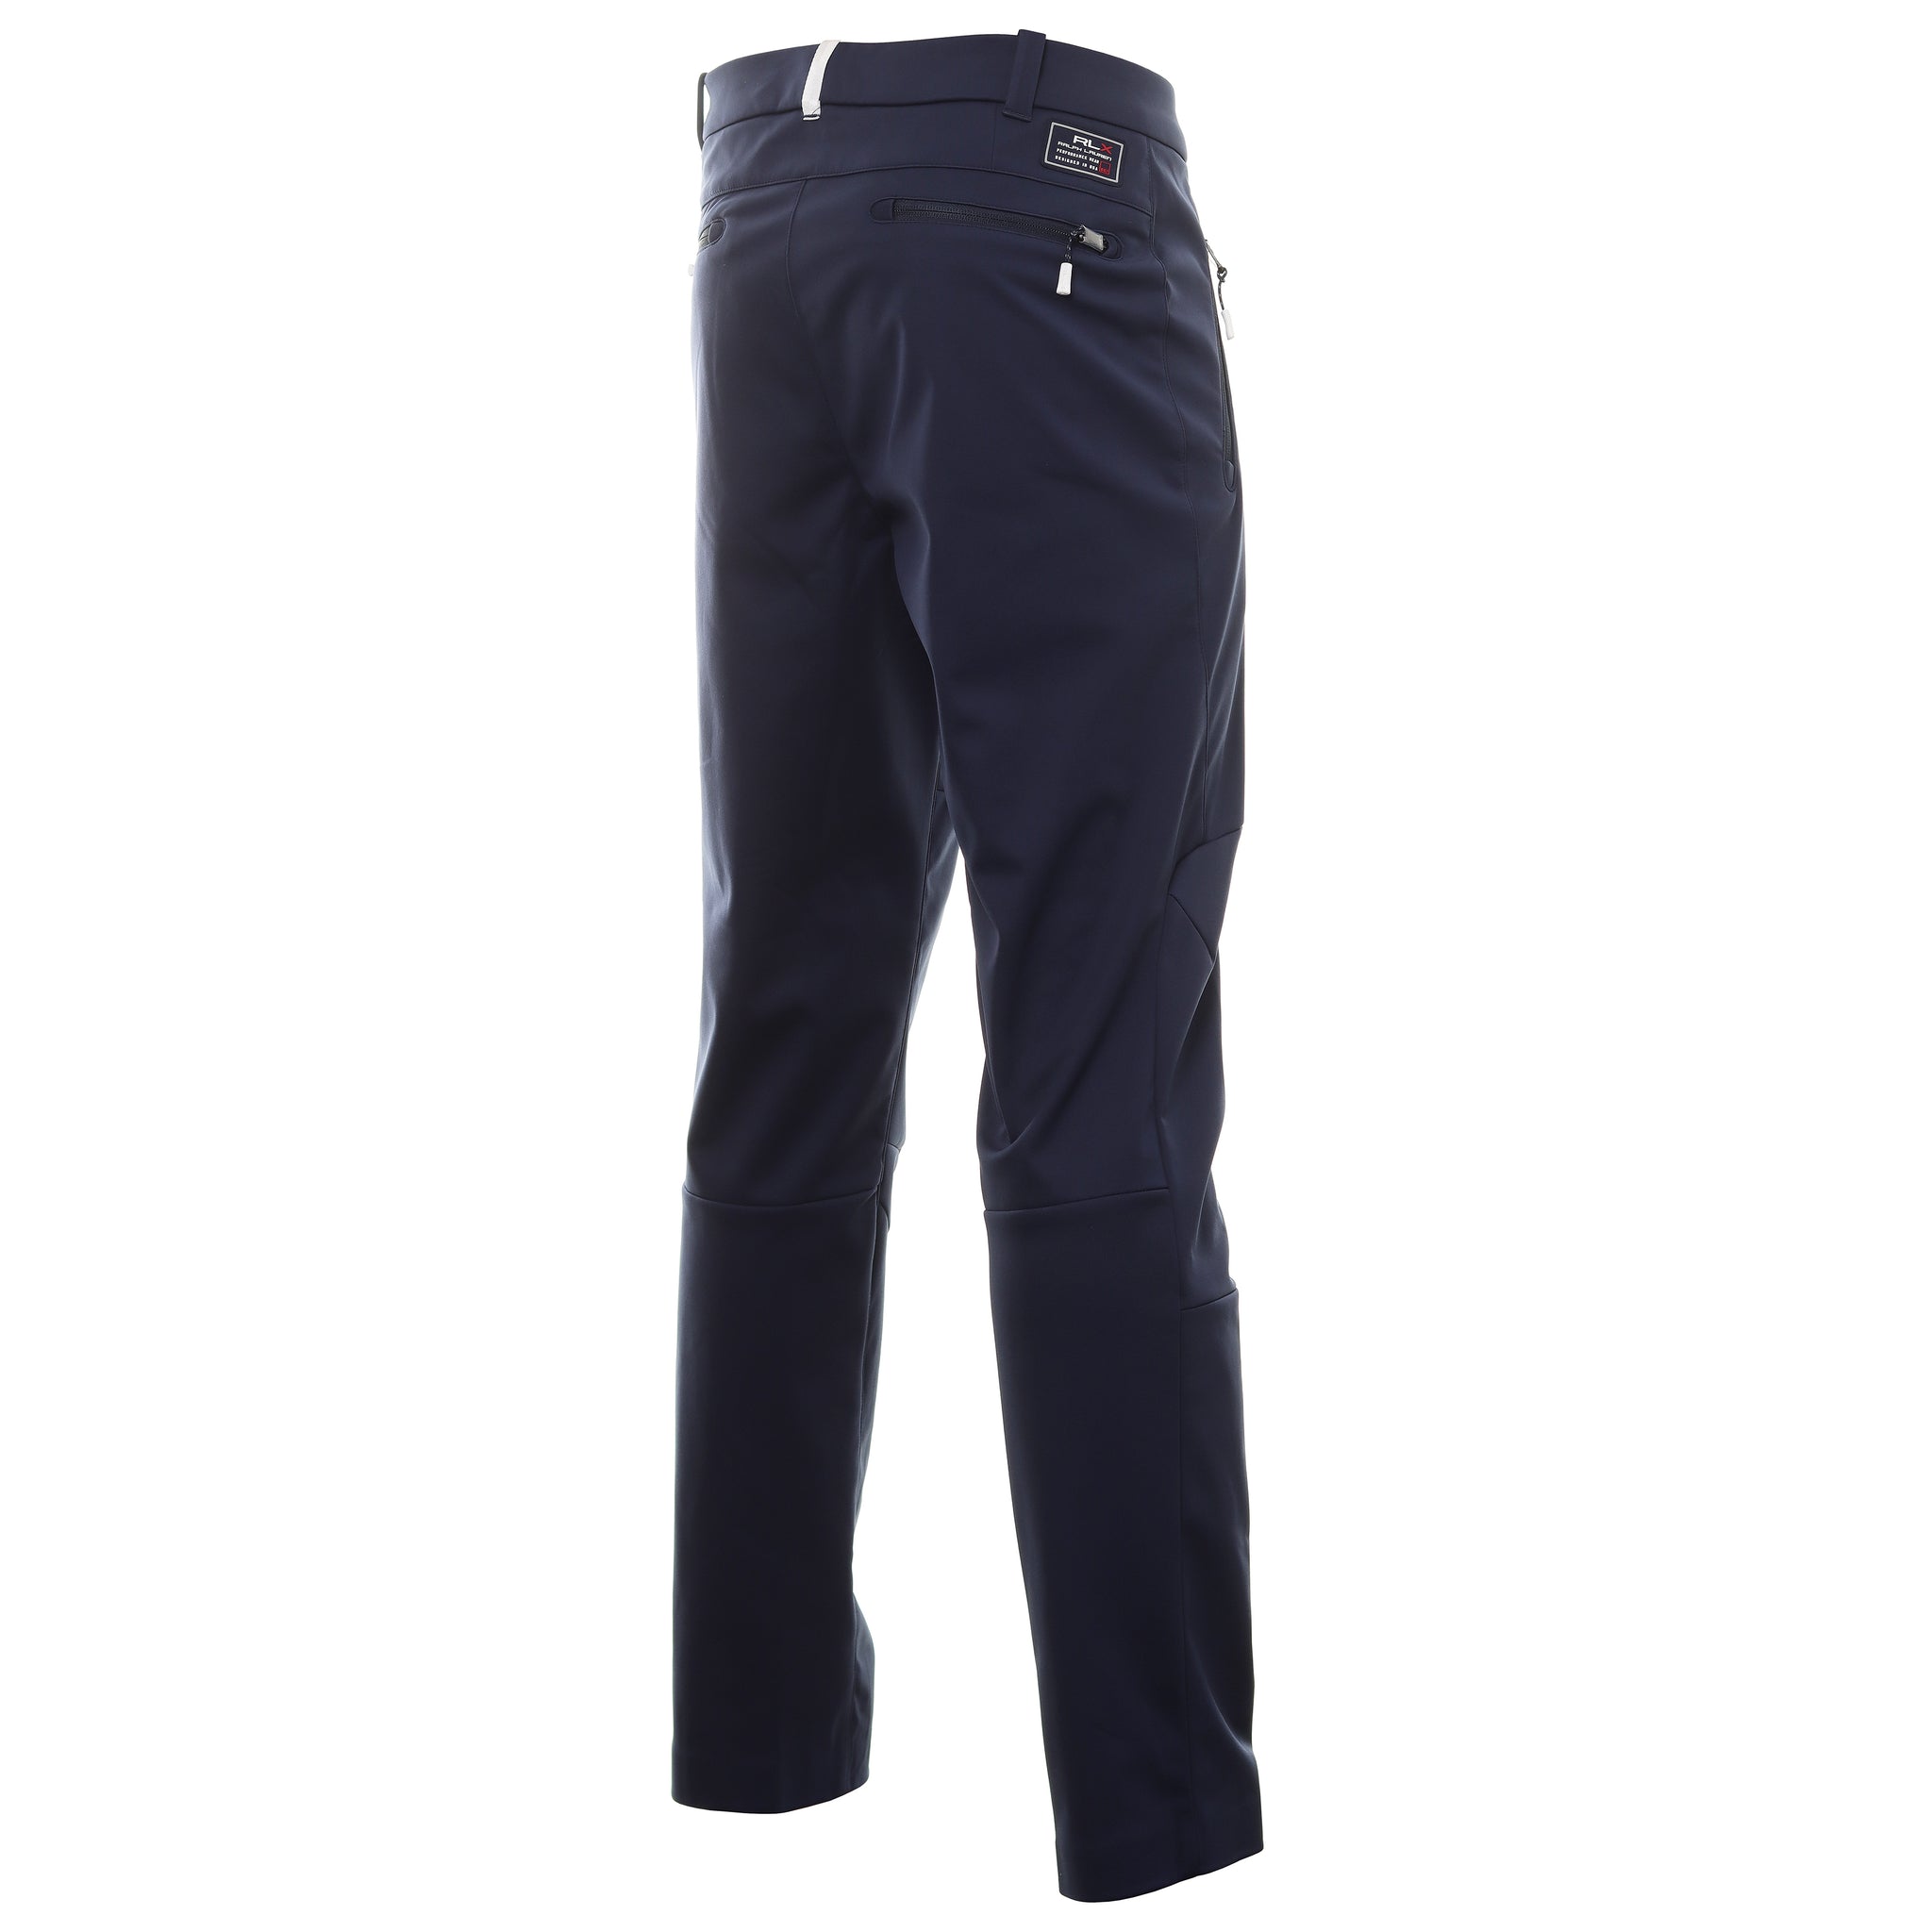 RLX Ralph Lauren Bonded Softshell Pants 785874945 French Navy 001, Function18